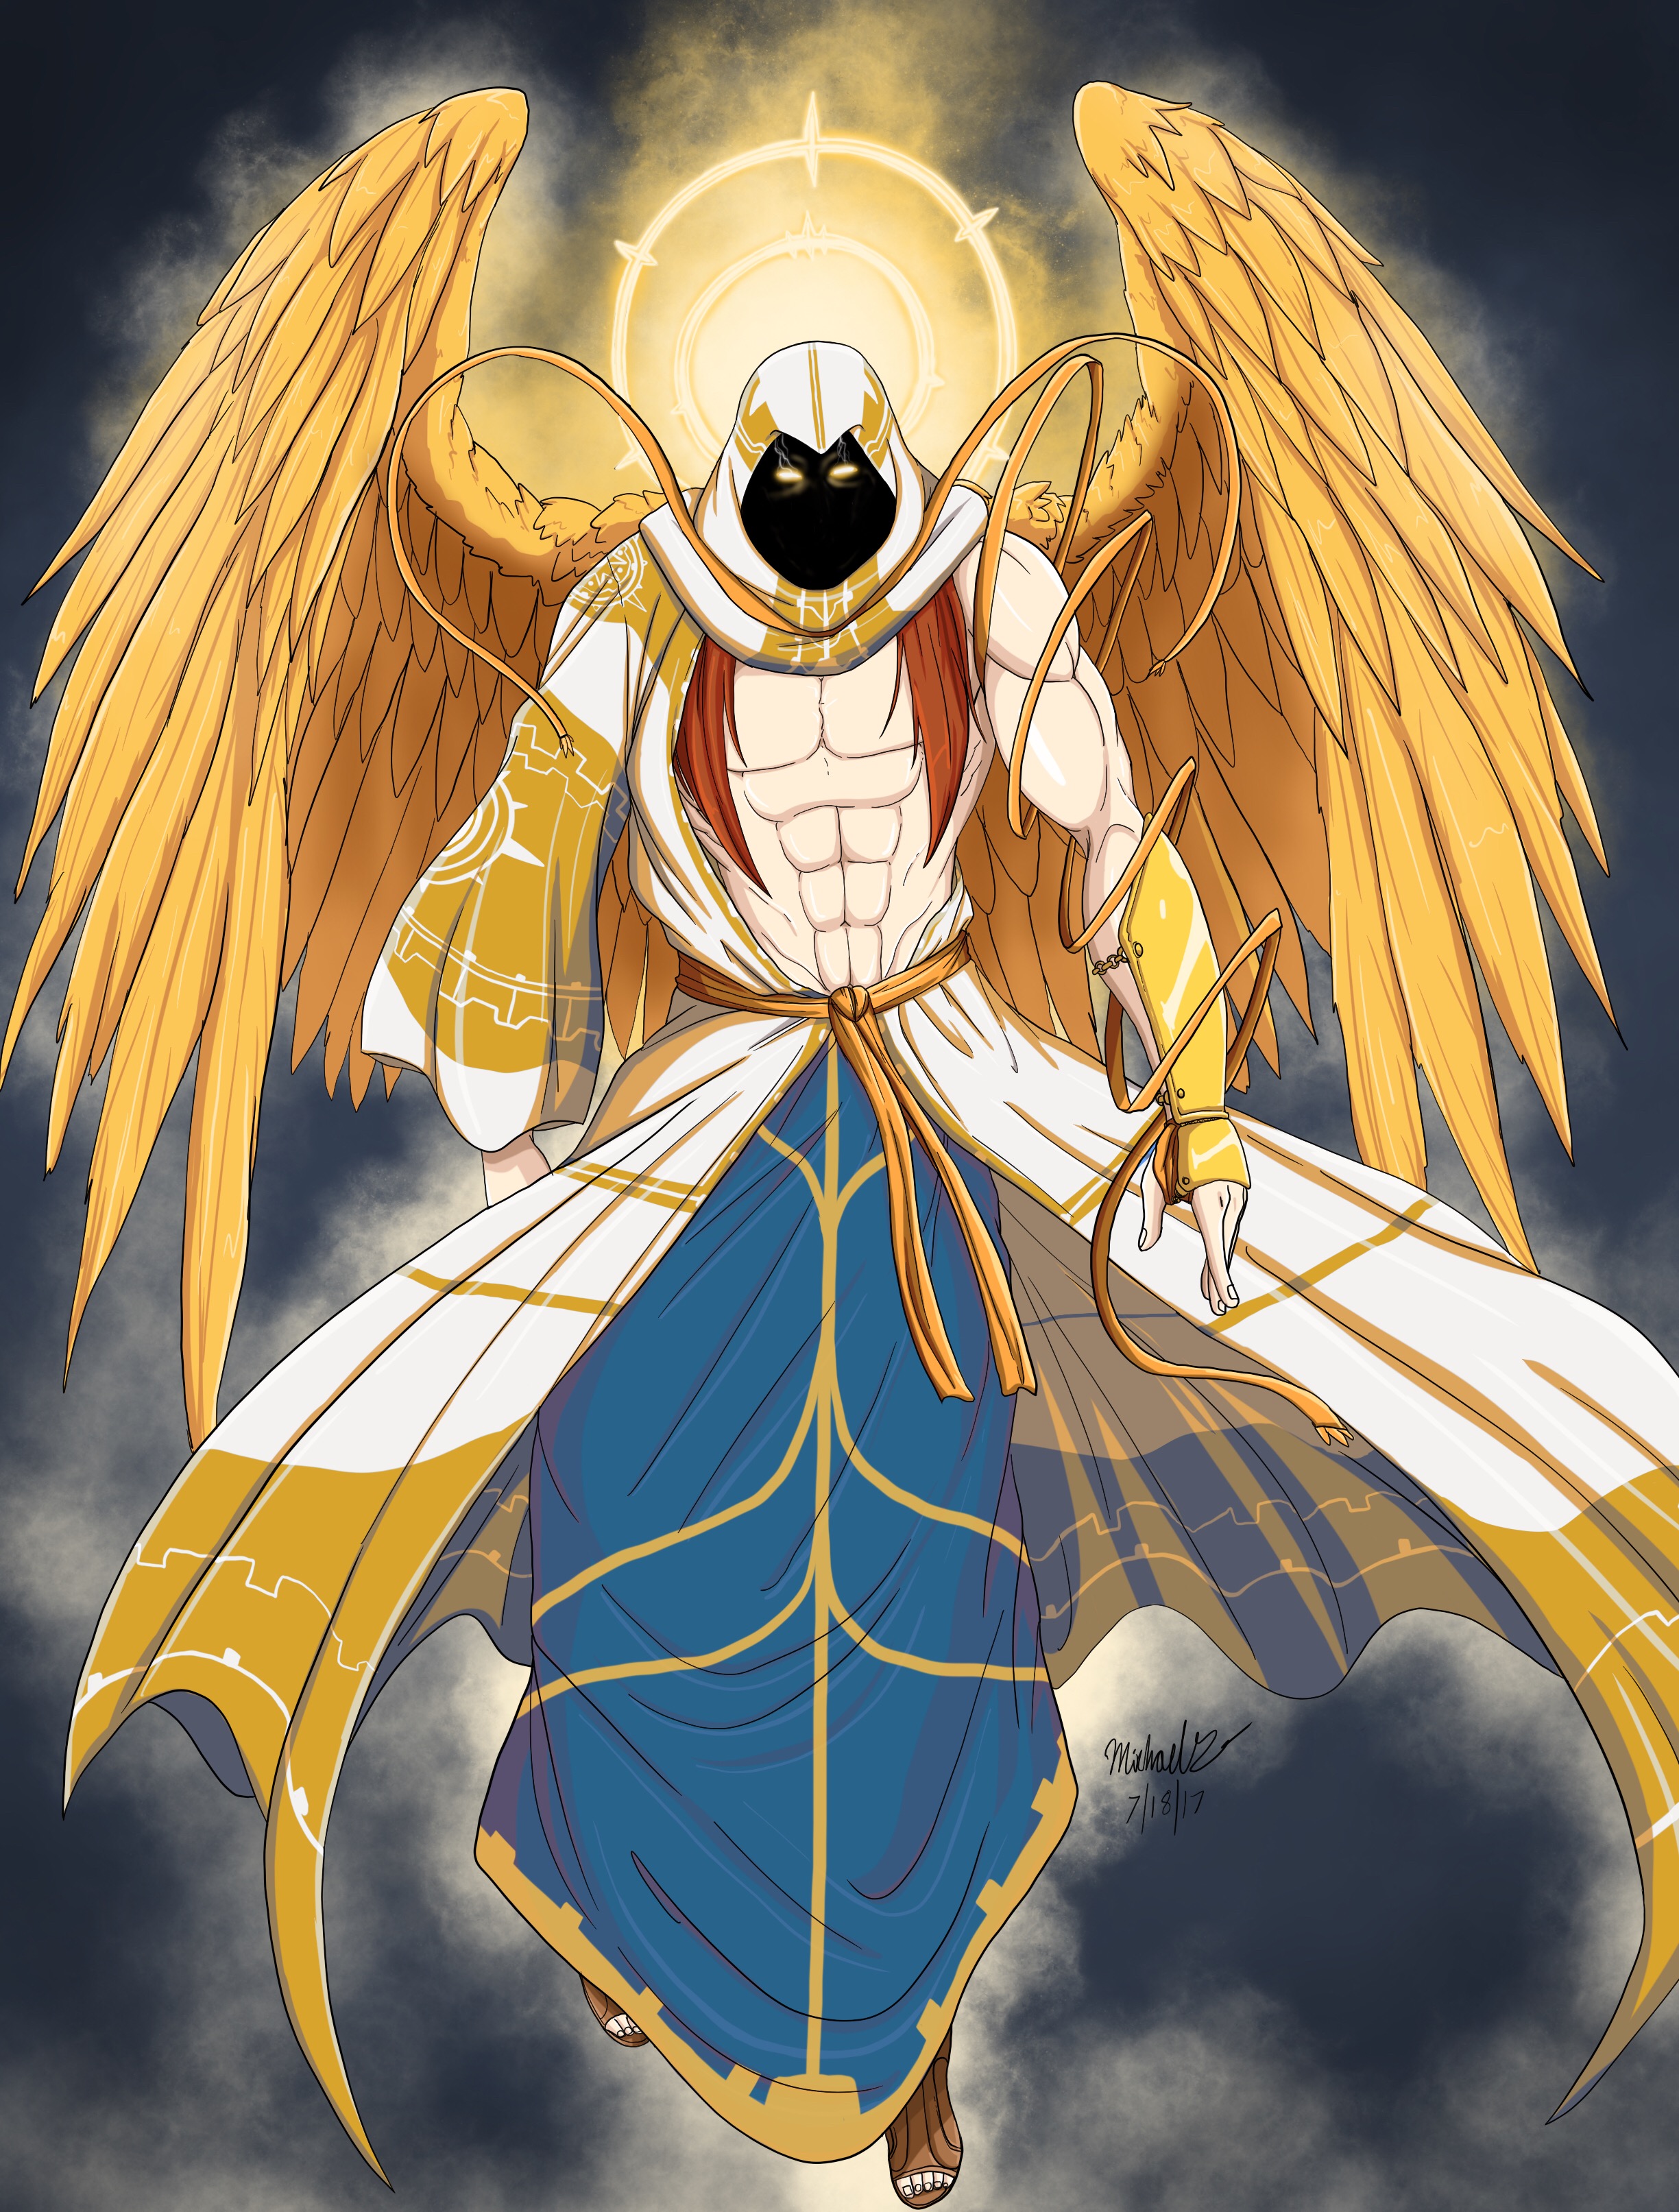 Archangel - Other & Anime Background Wallpapers on Desktop Nexus (Image  1663795)